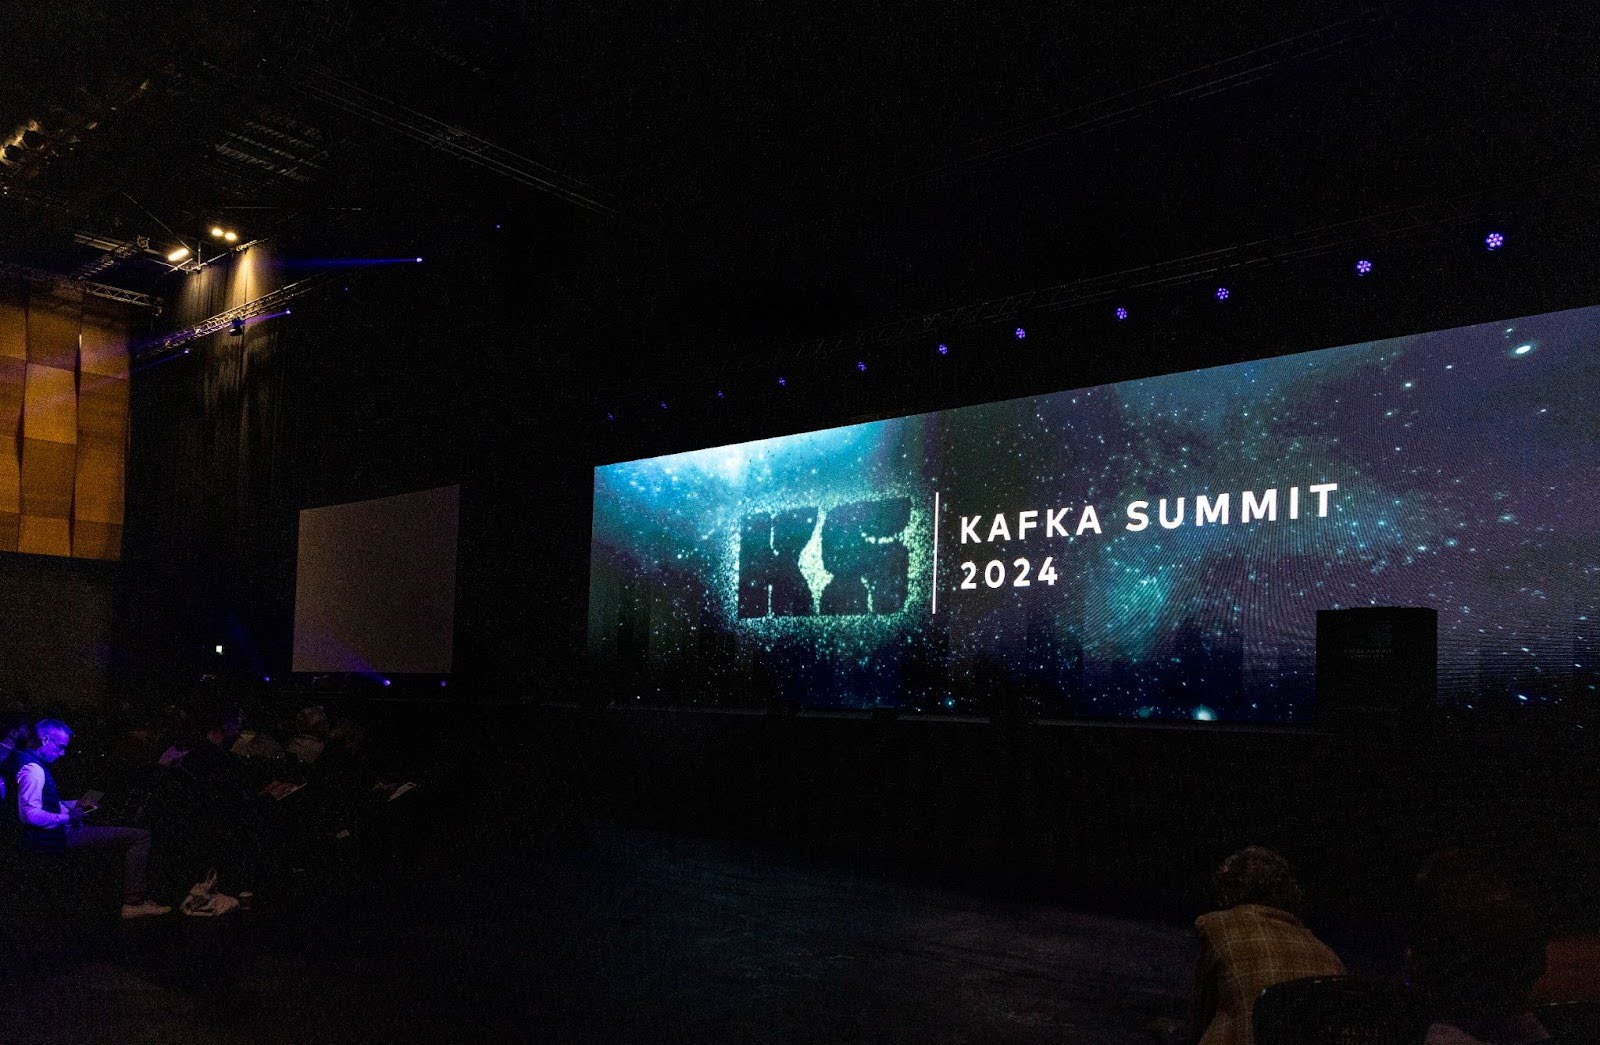 Kafka Summit Bangalore 2024: Bringing Data Streaming to You